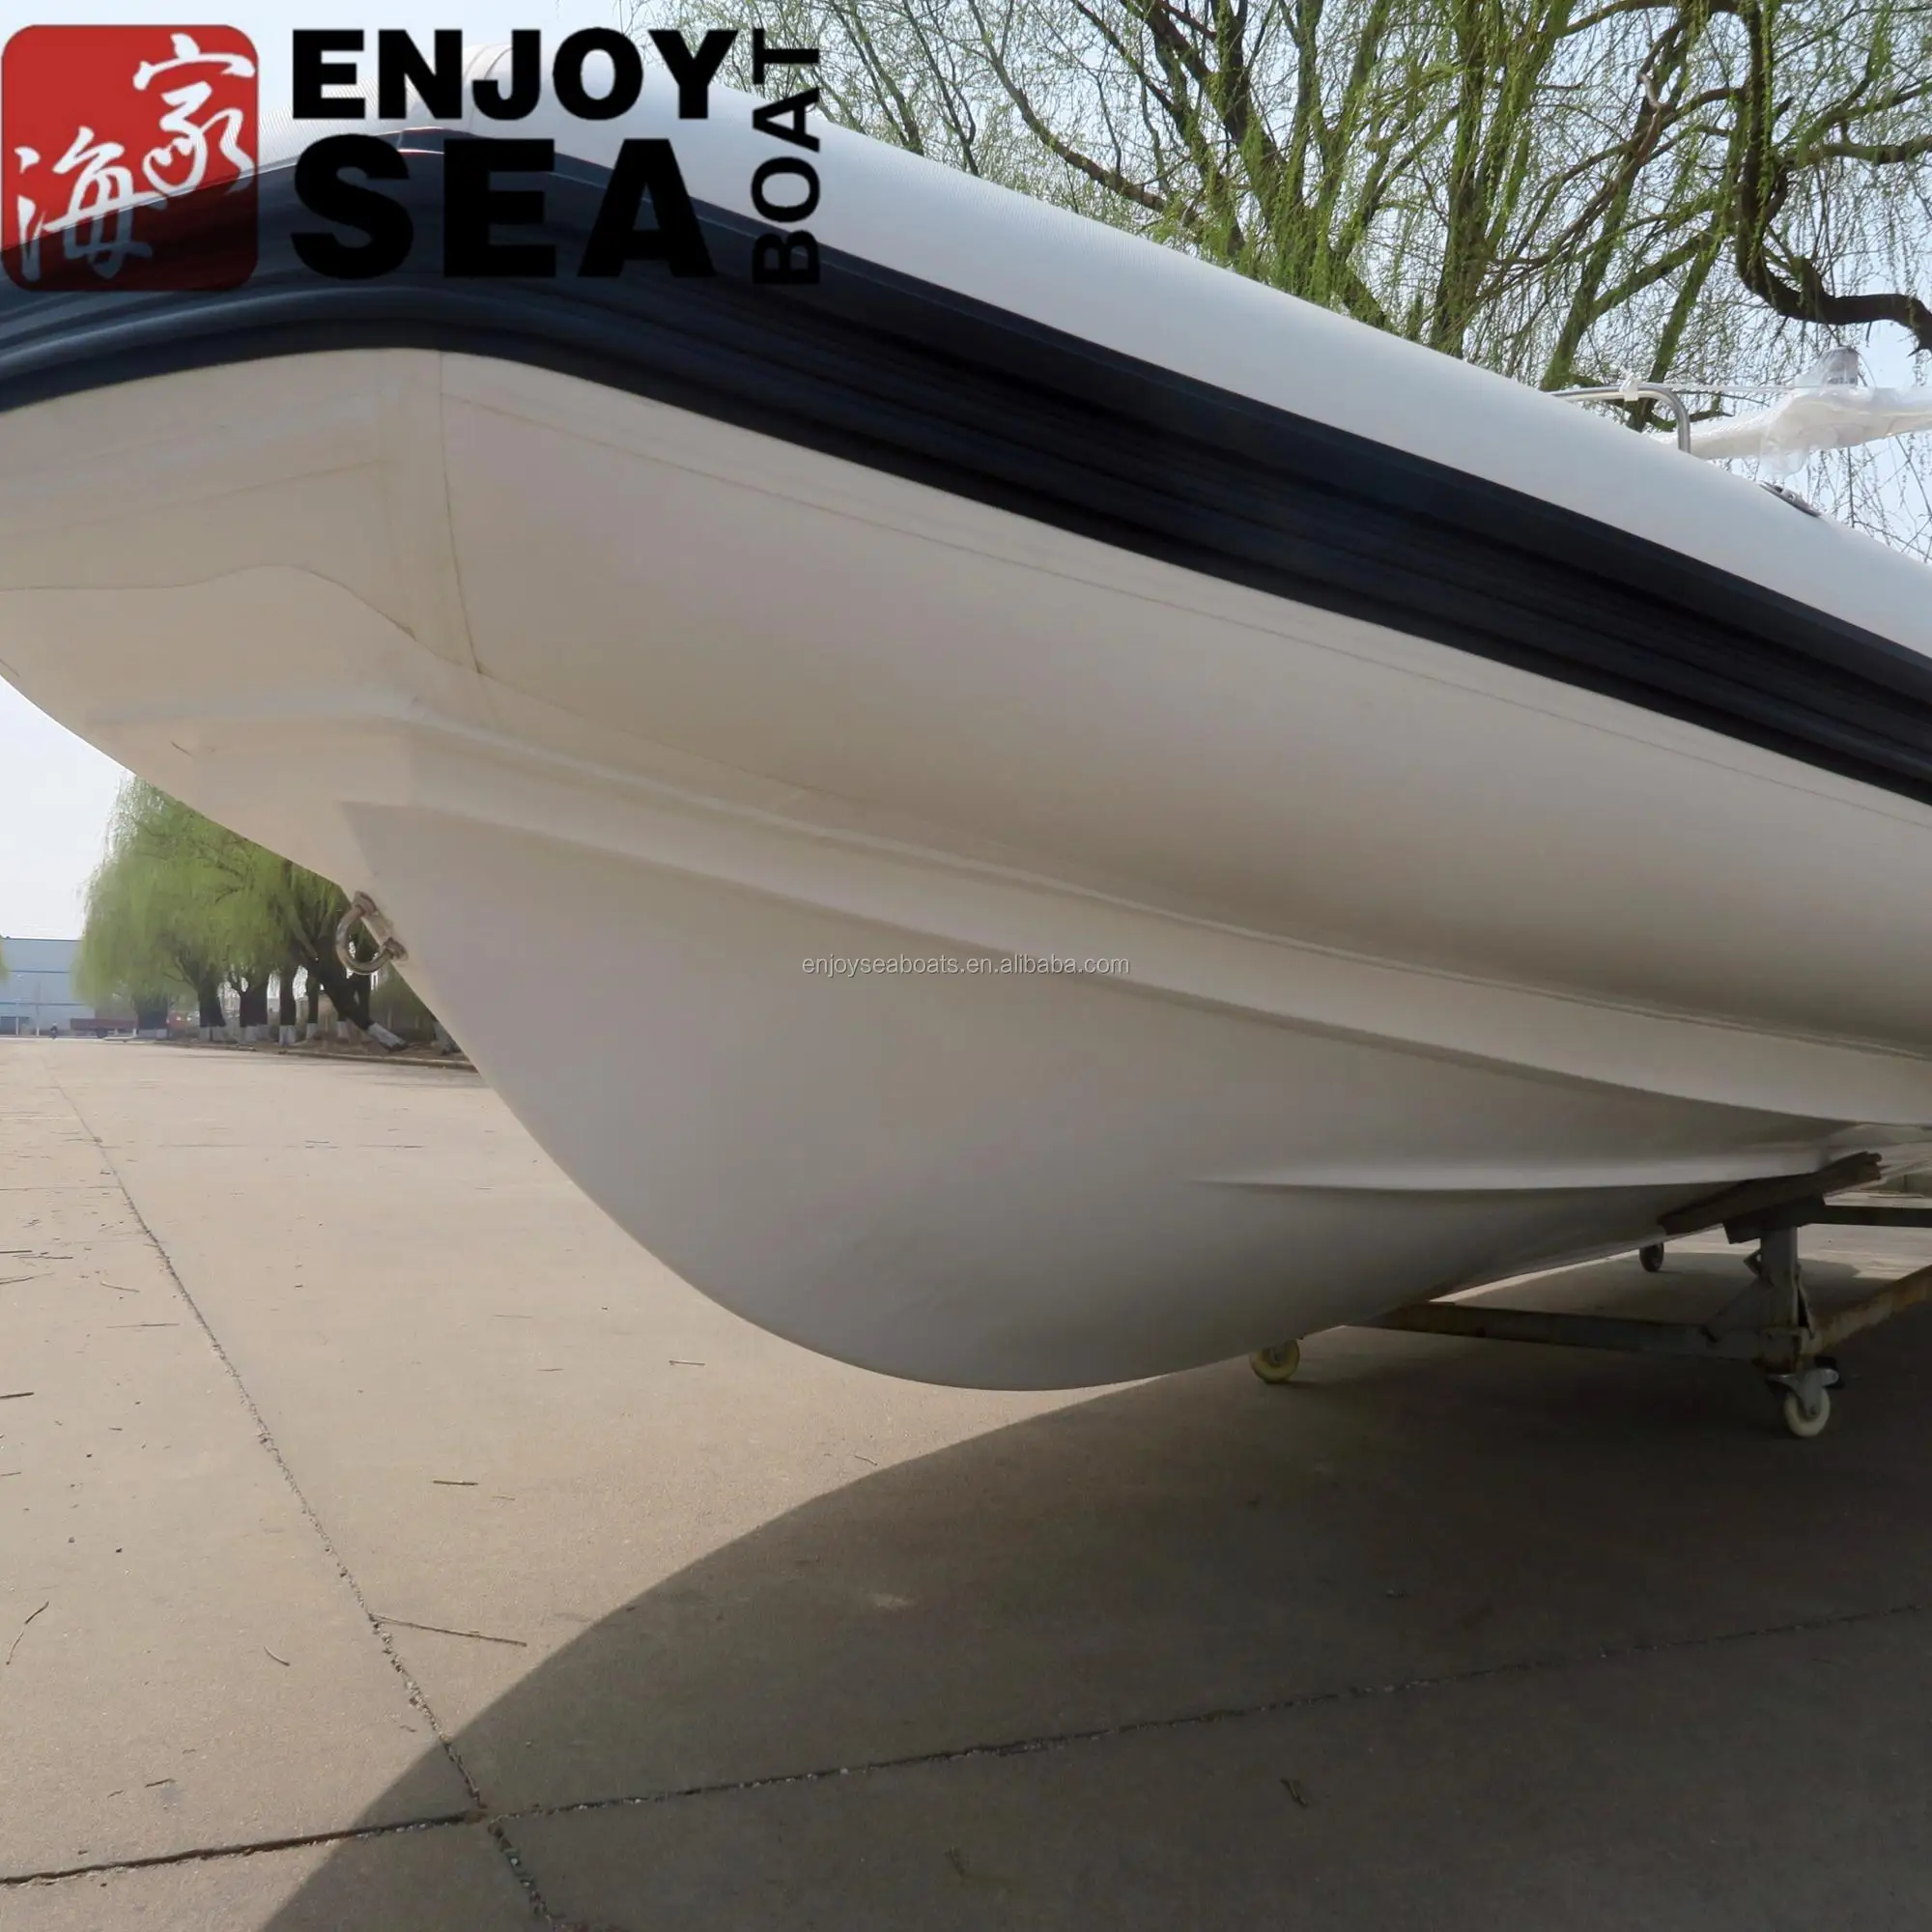 
1.2mm pvc inflatable speed motor boat / marine motor launch with RIB 580 from enjoysea jiahai boats 